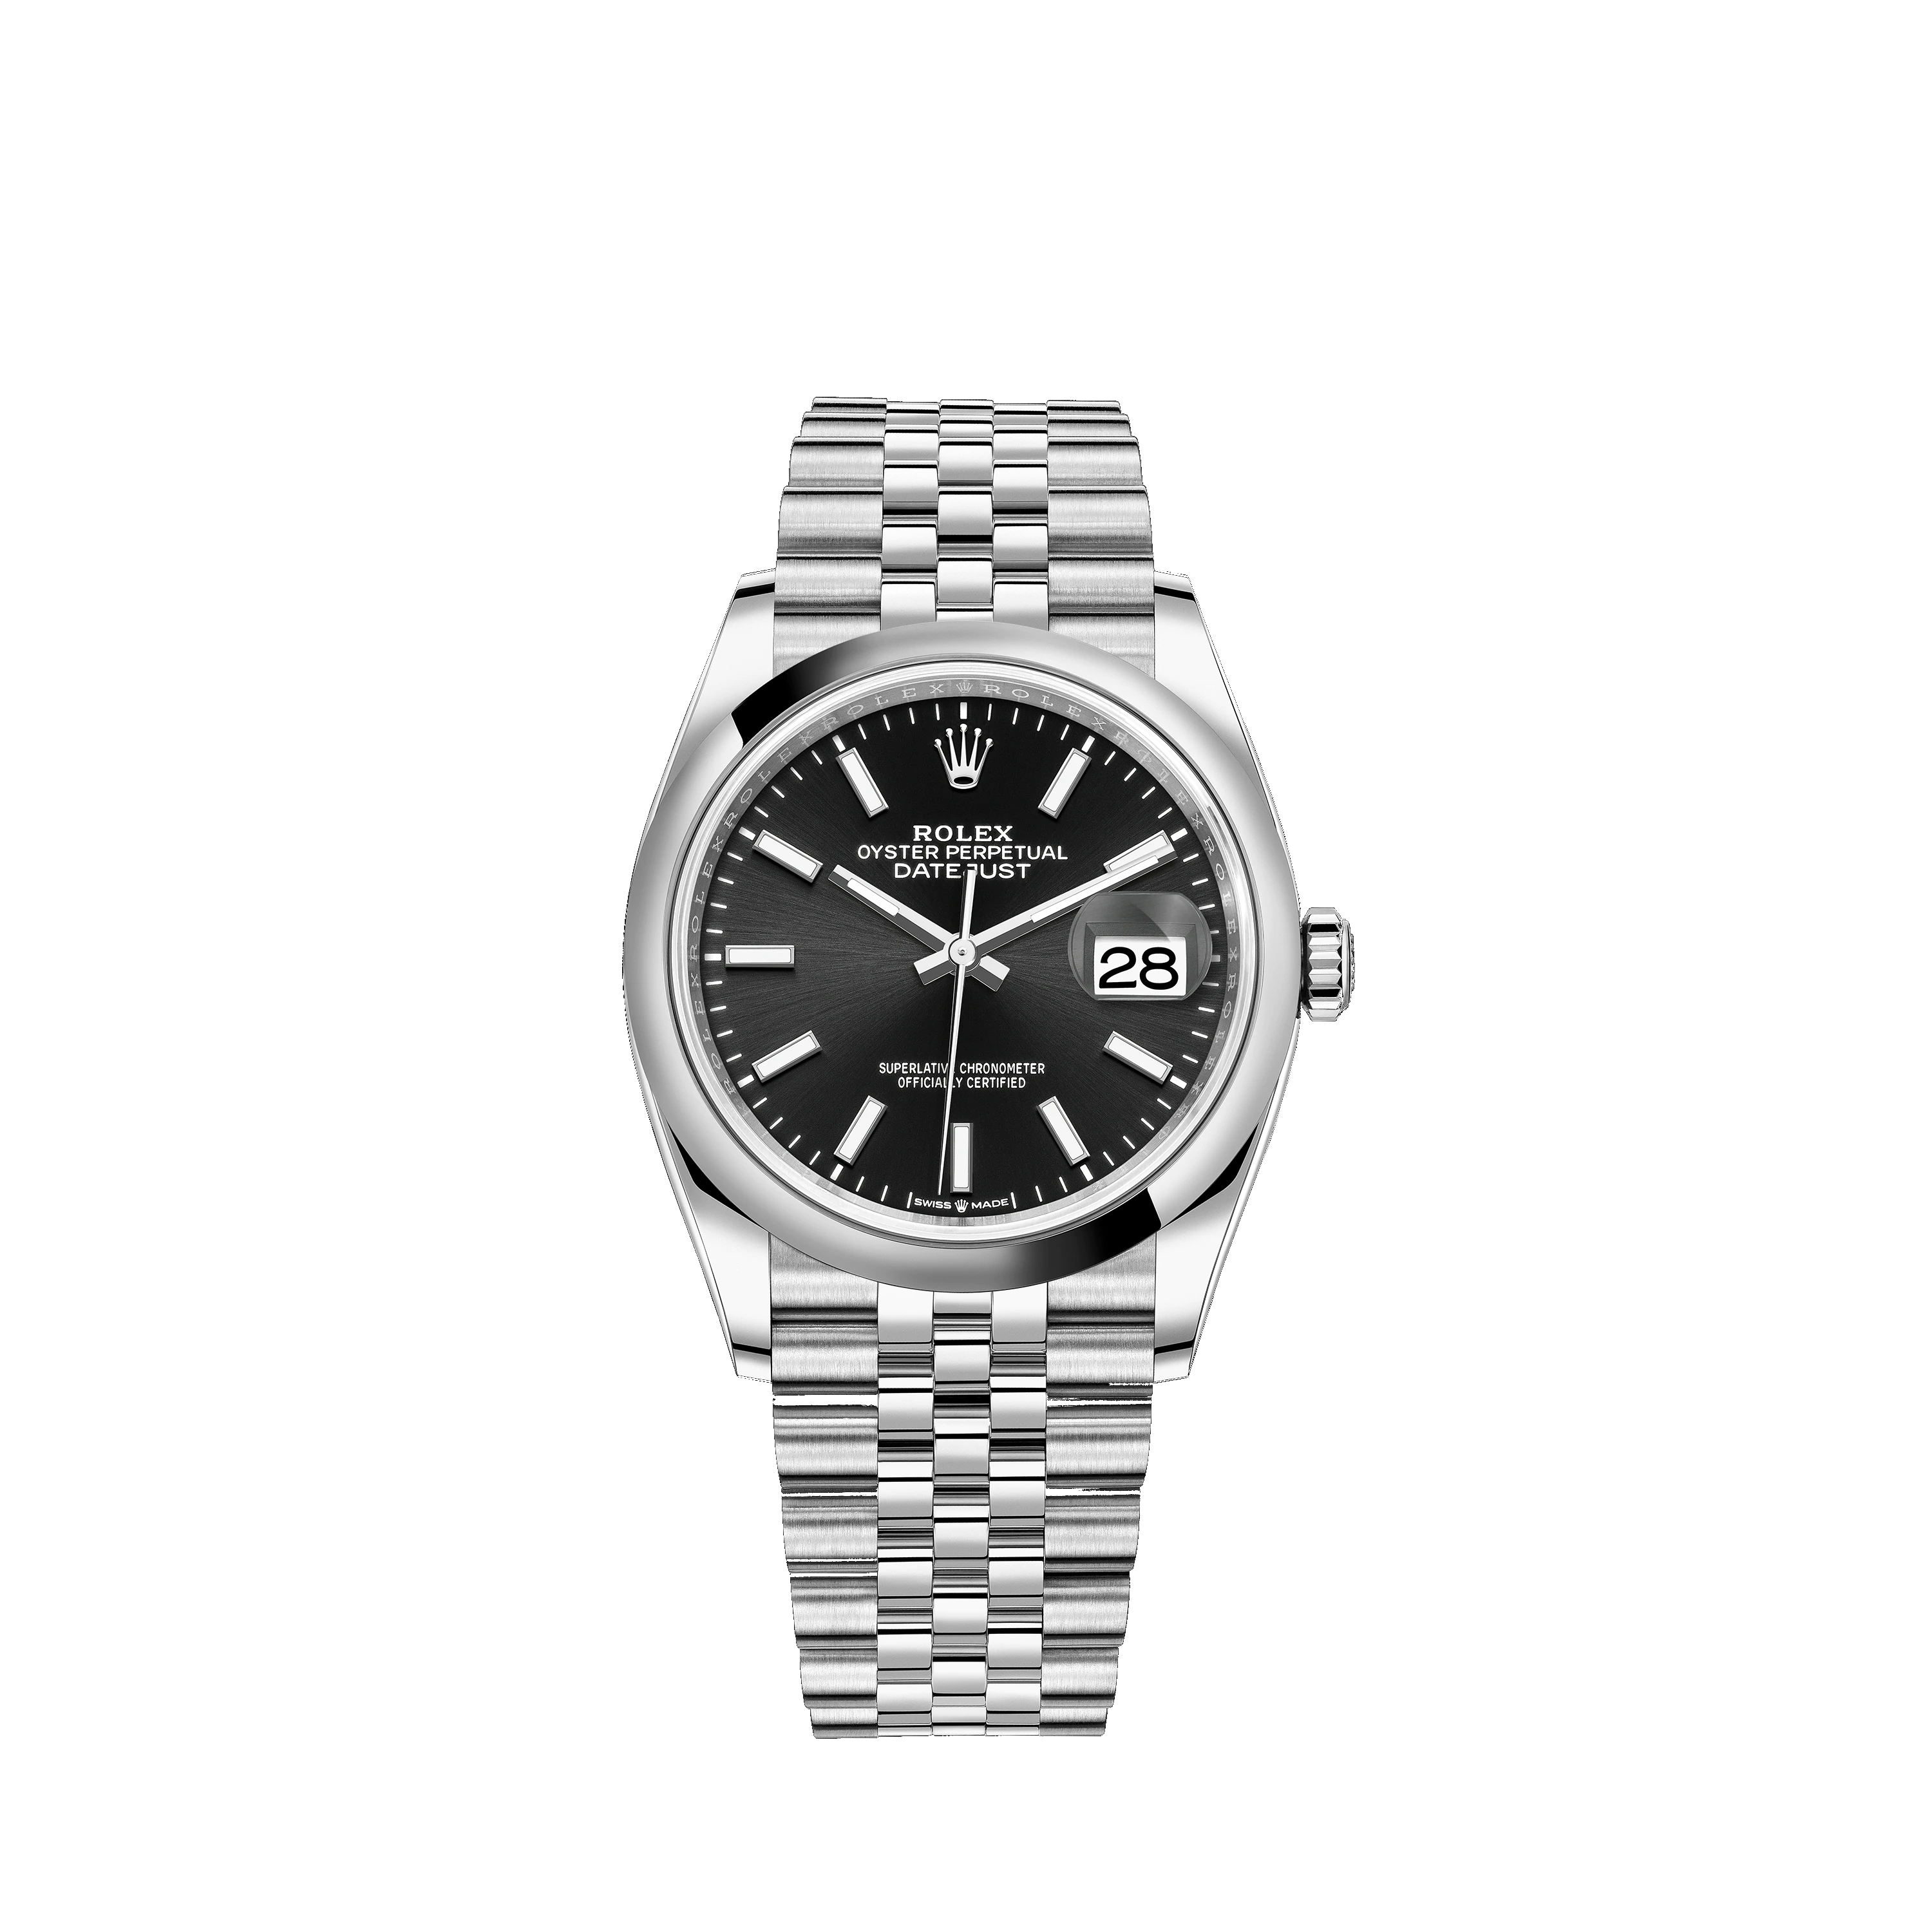 Datejust 36 126200 Stainless Steel Watch (Black)